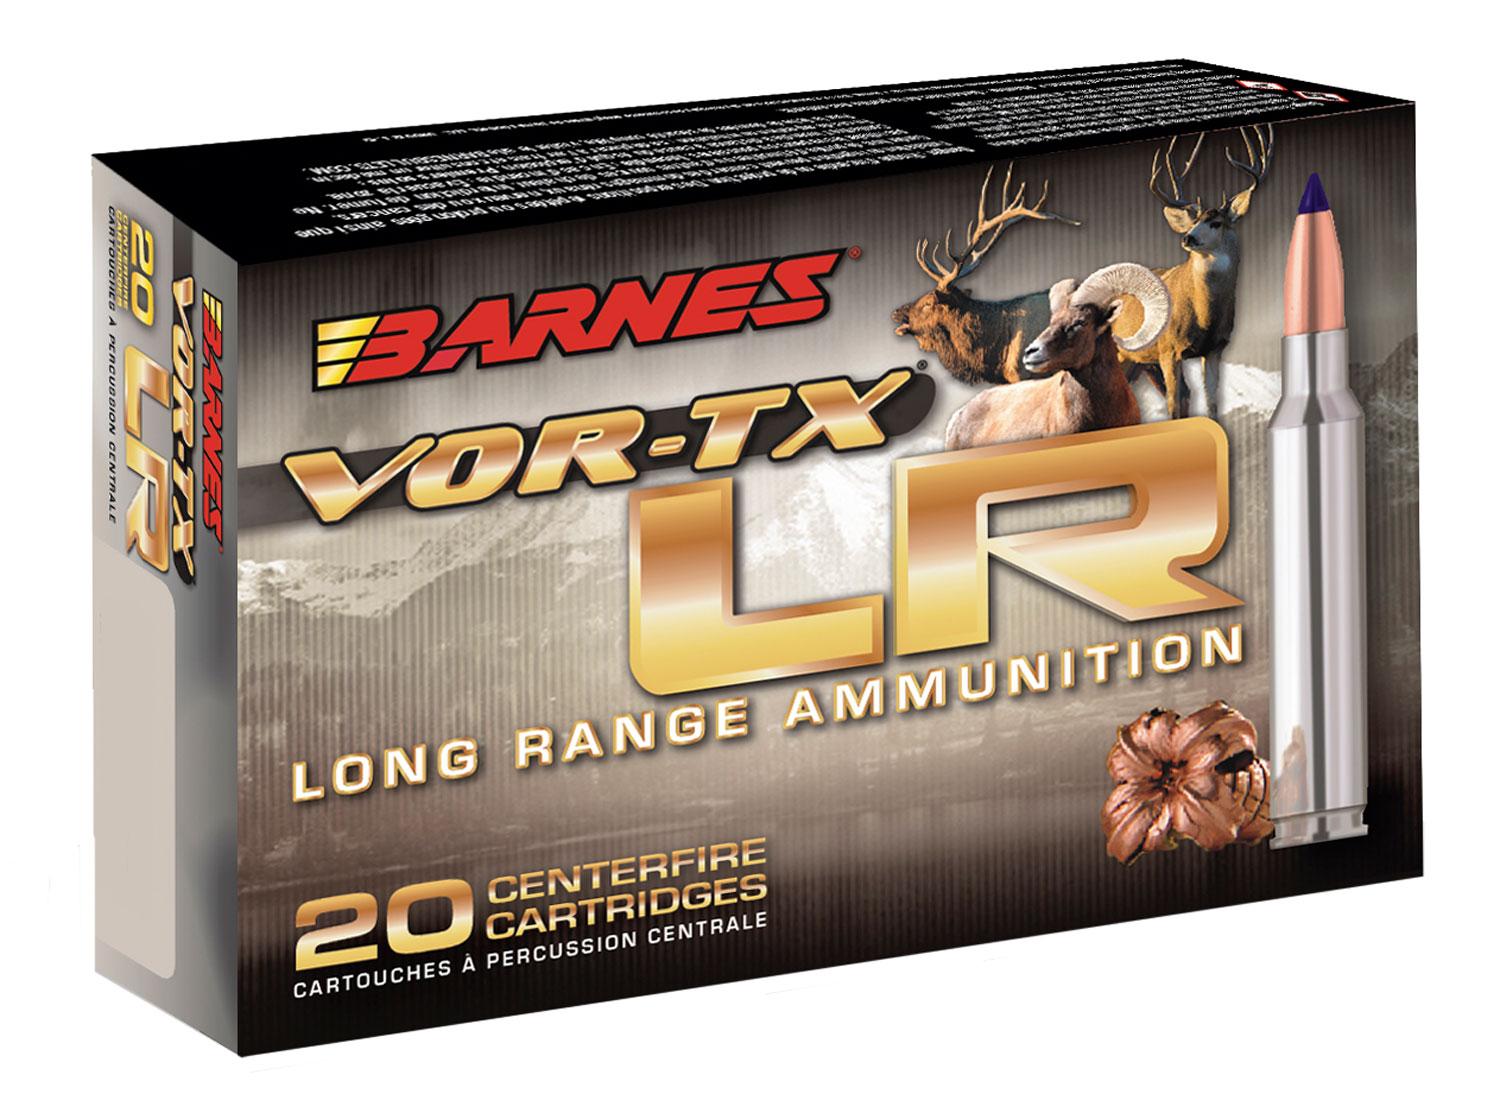 Barnes VOR-TX Rifle Ammunition 28986, 6.5 Creedmoor, LRX Boat Tail, 127 GR, 20 Rd/Bx